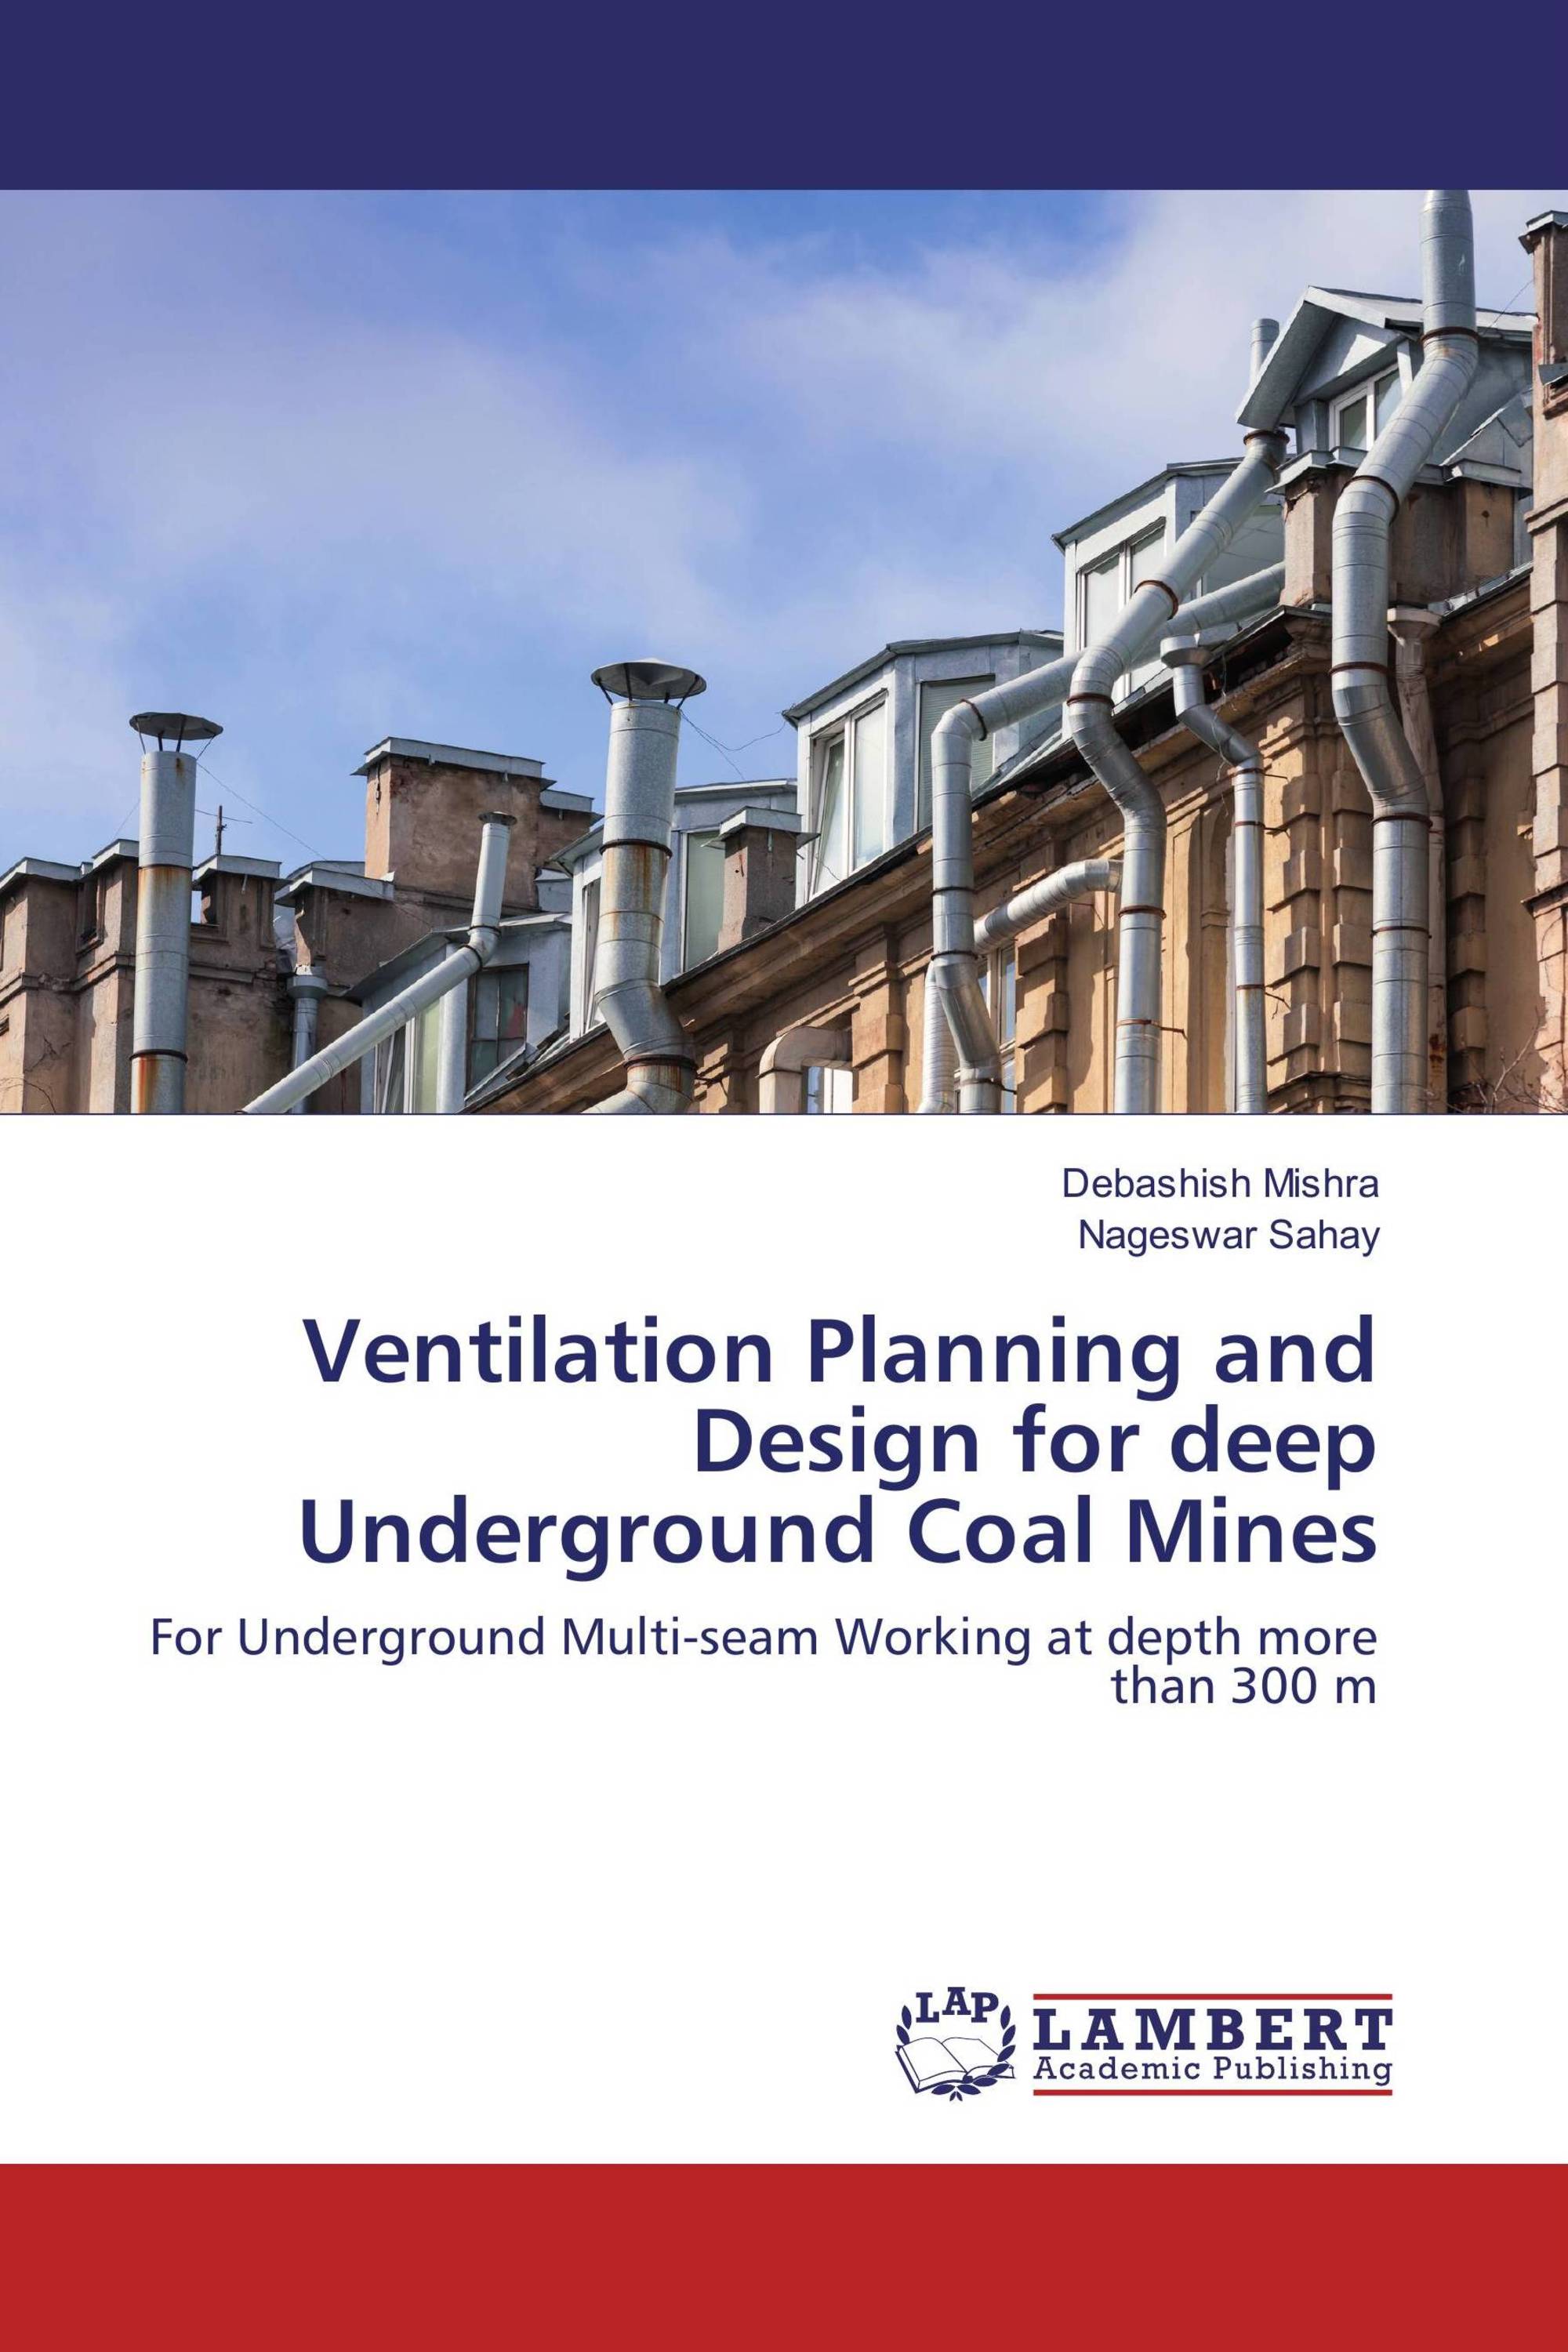 Mining ventilation thesis